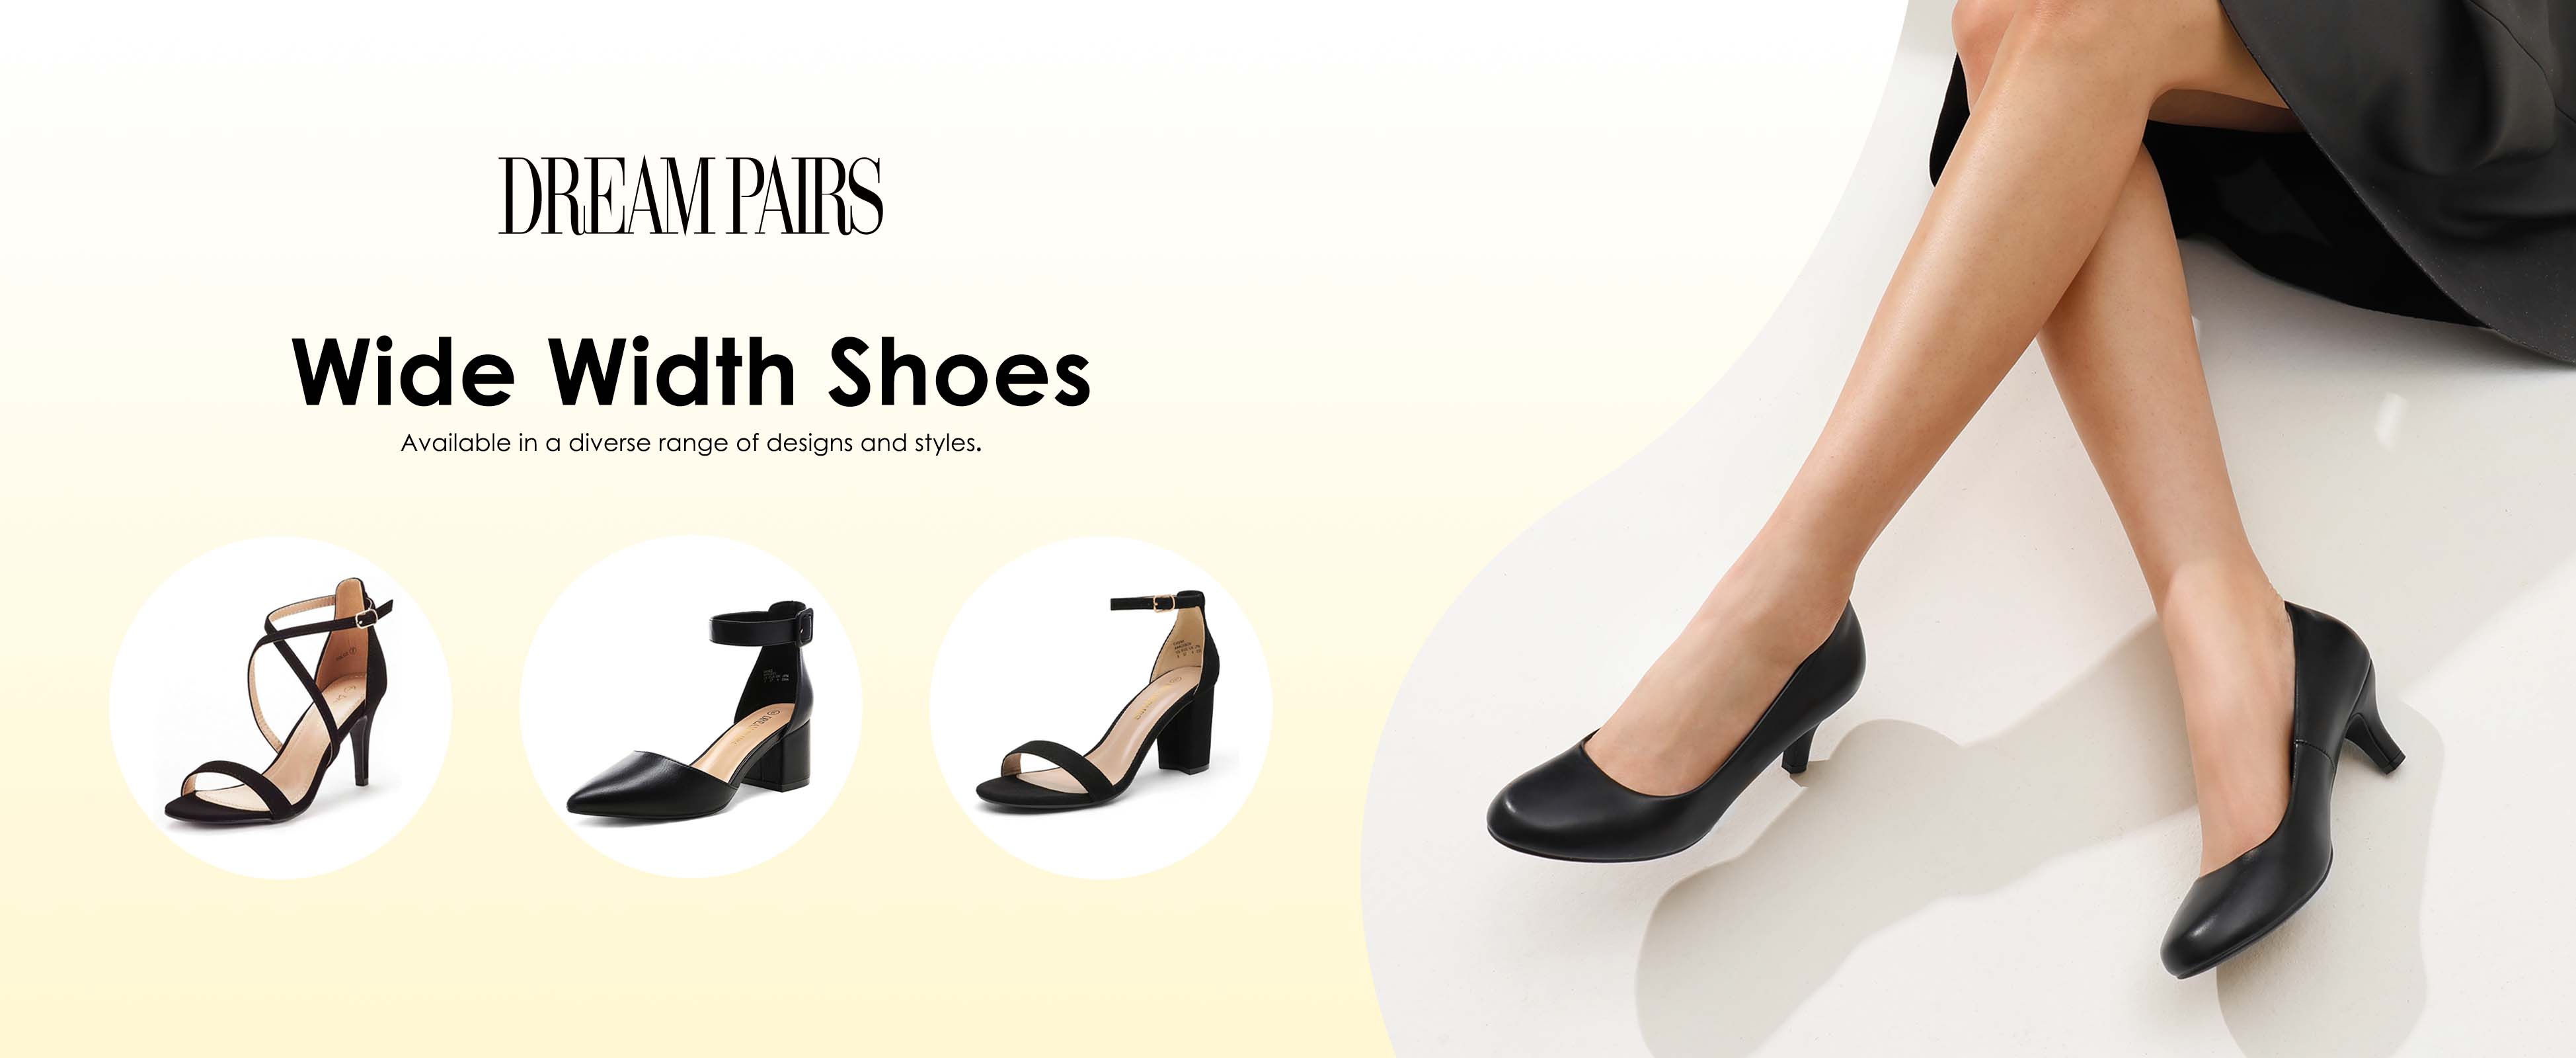 Fancy Transparent Heels | Heels | Pumps Shoes | New Collection | Pumps heels,  Pump shoes, Transparent heels